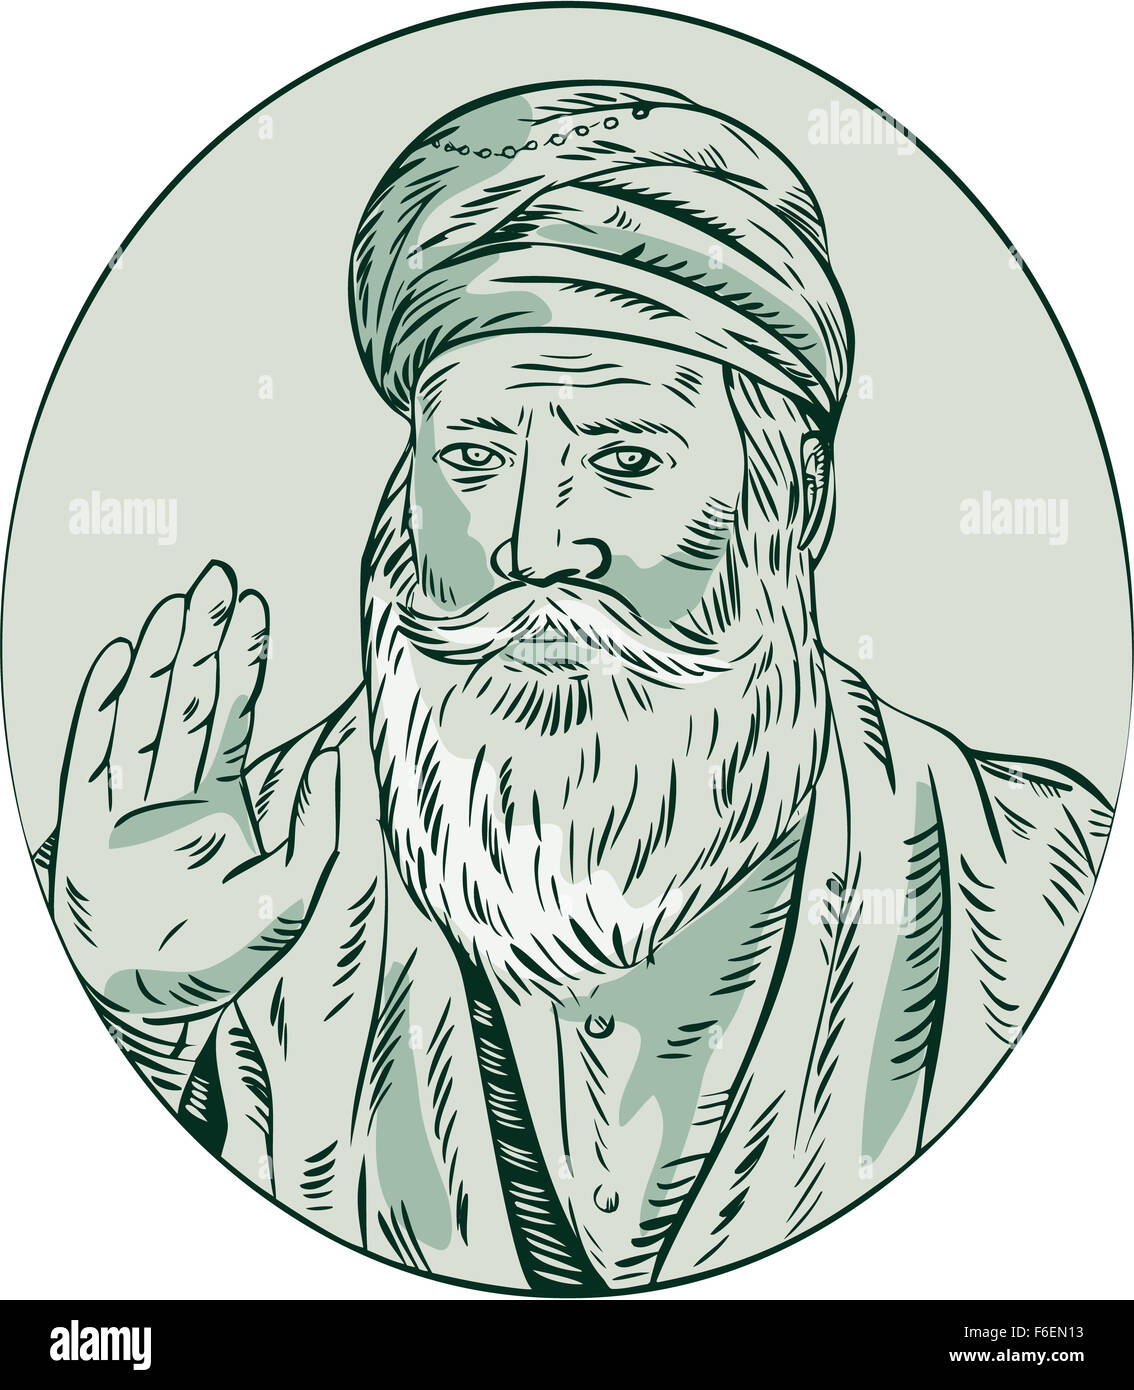 Etching engraving handmade style illustration of a Sikh guru nanak ji priest waving viewed from front set inside oval. Stock Photo